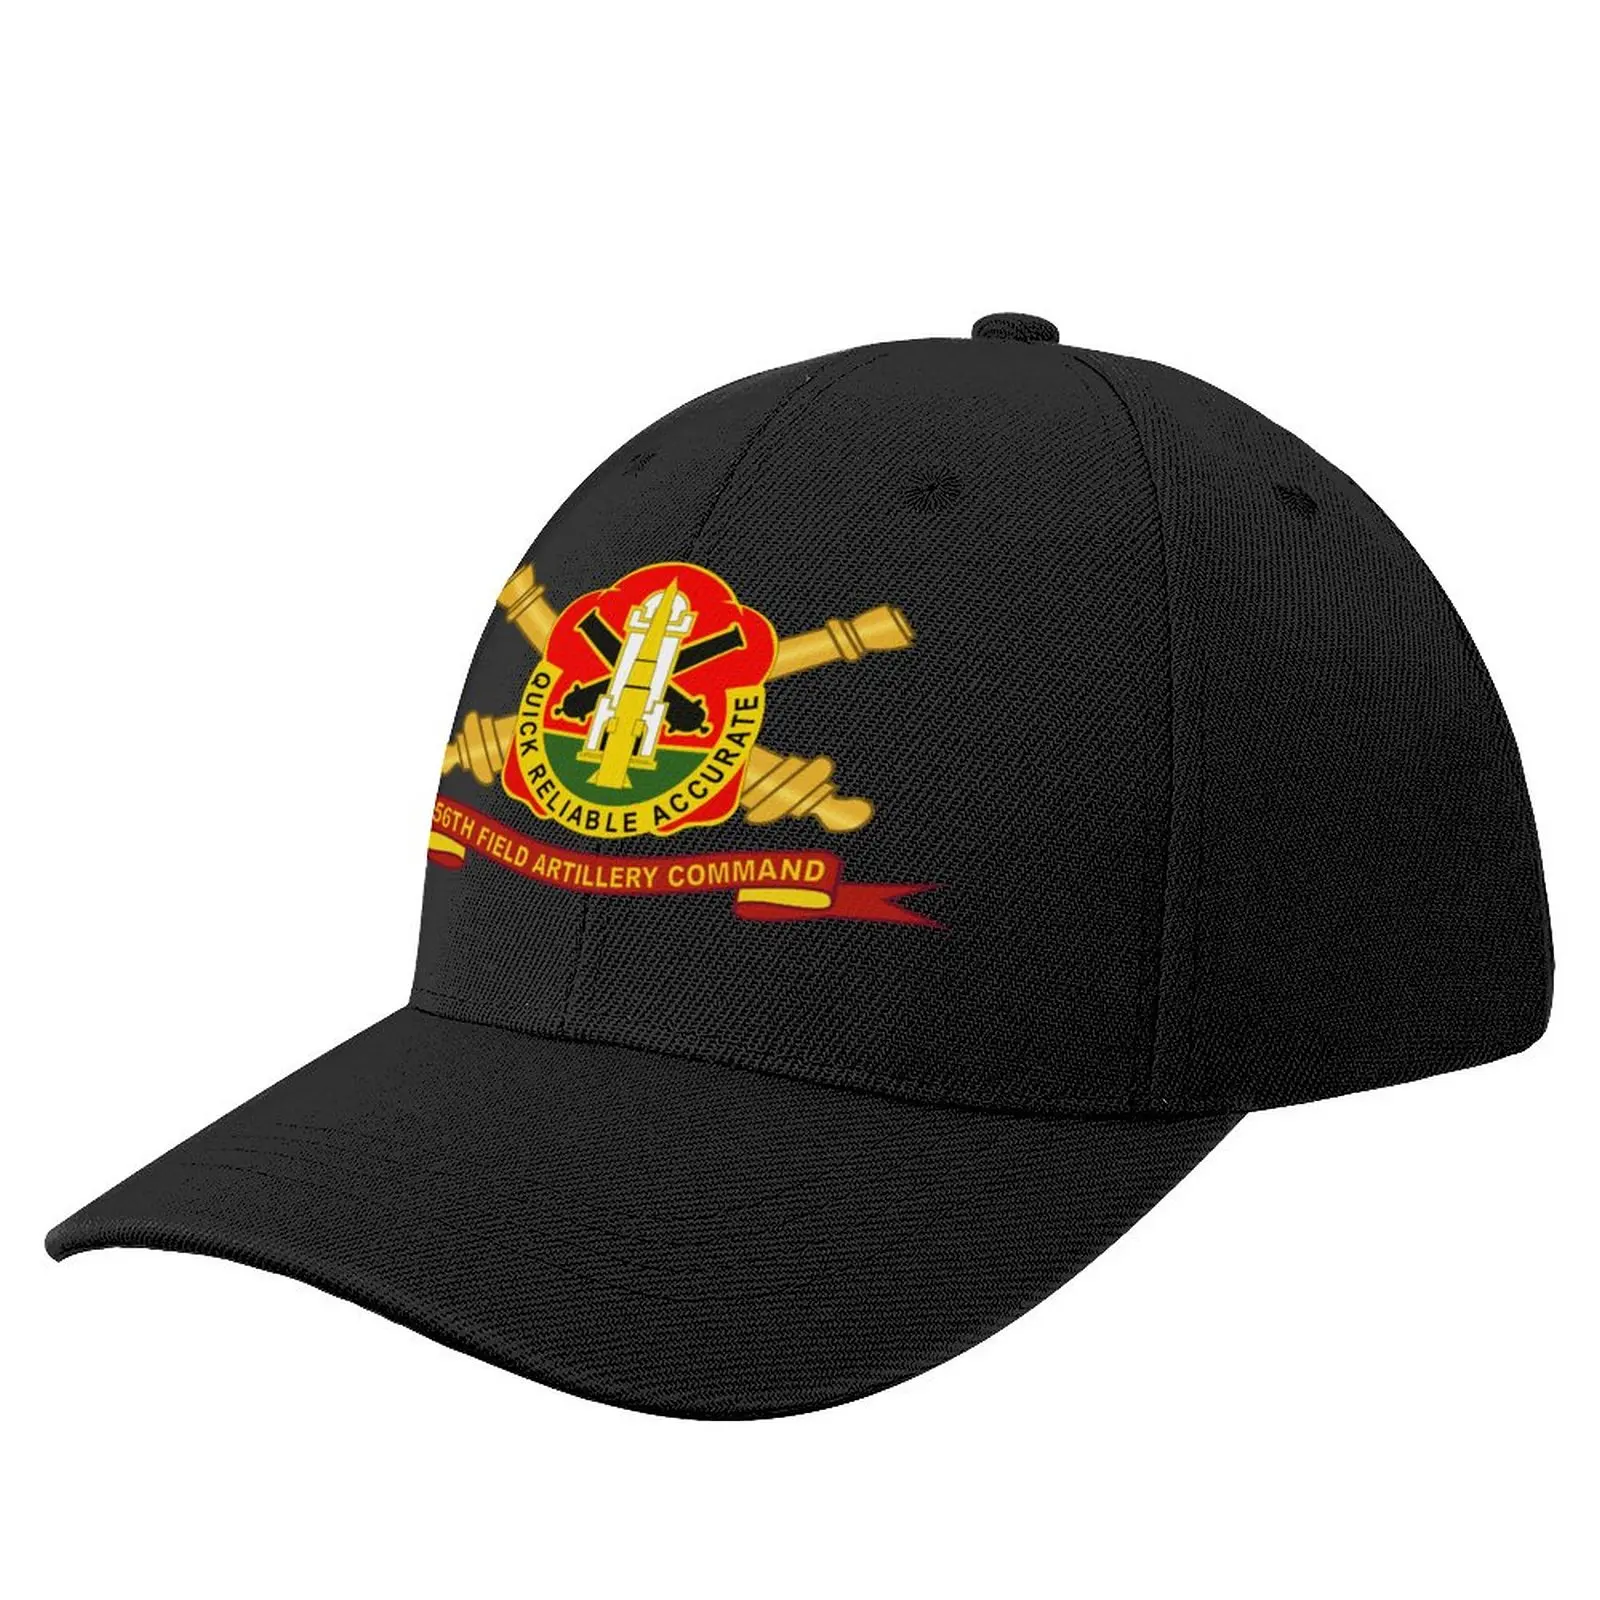 

Army - 56th Field Artillery Command - DUI w Br - Ribbon Baseball Cap Golf birthday New In The Hat fishing hat Hat Women Men's